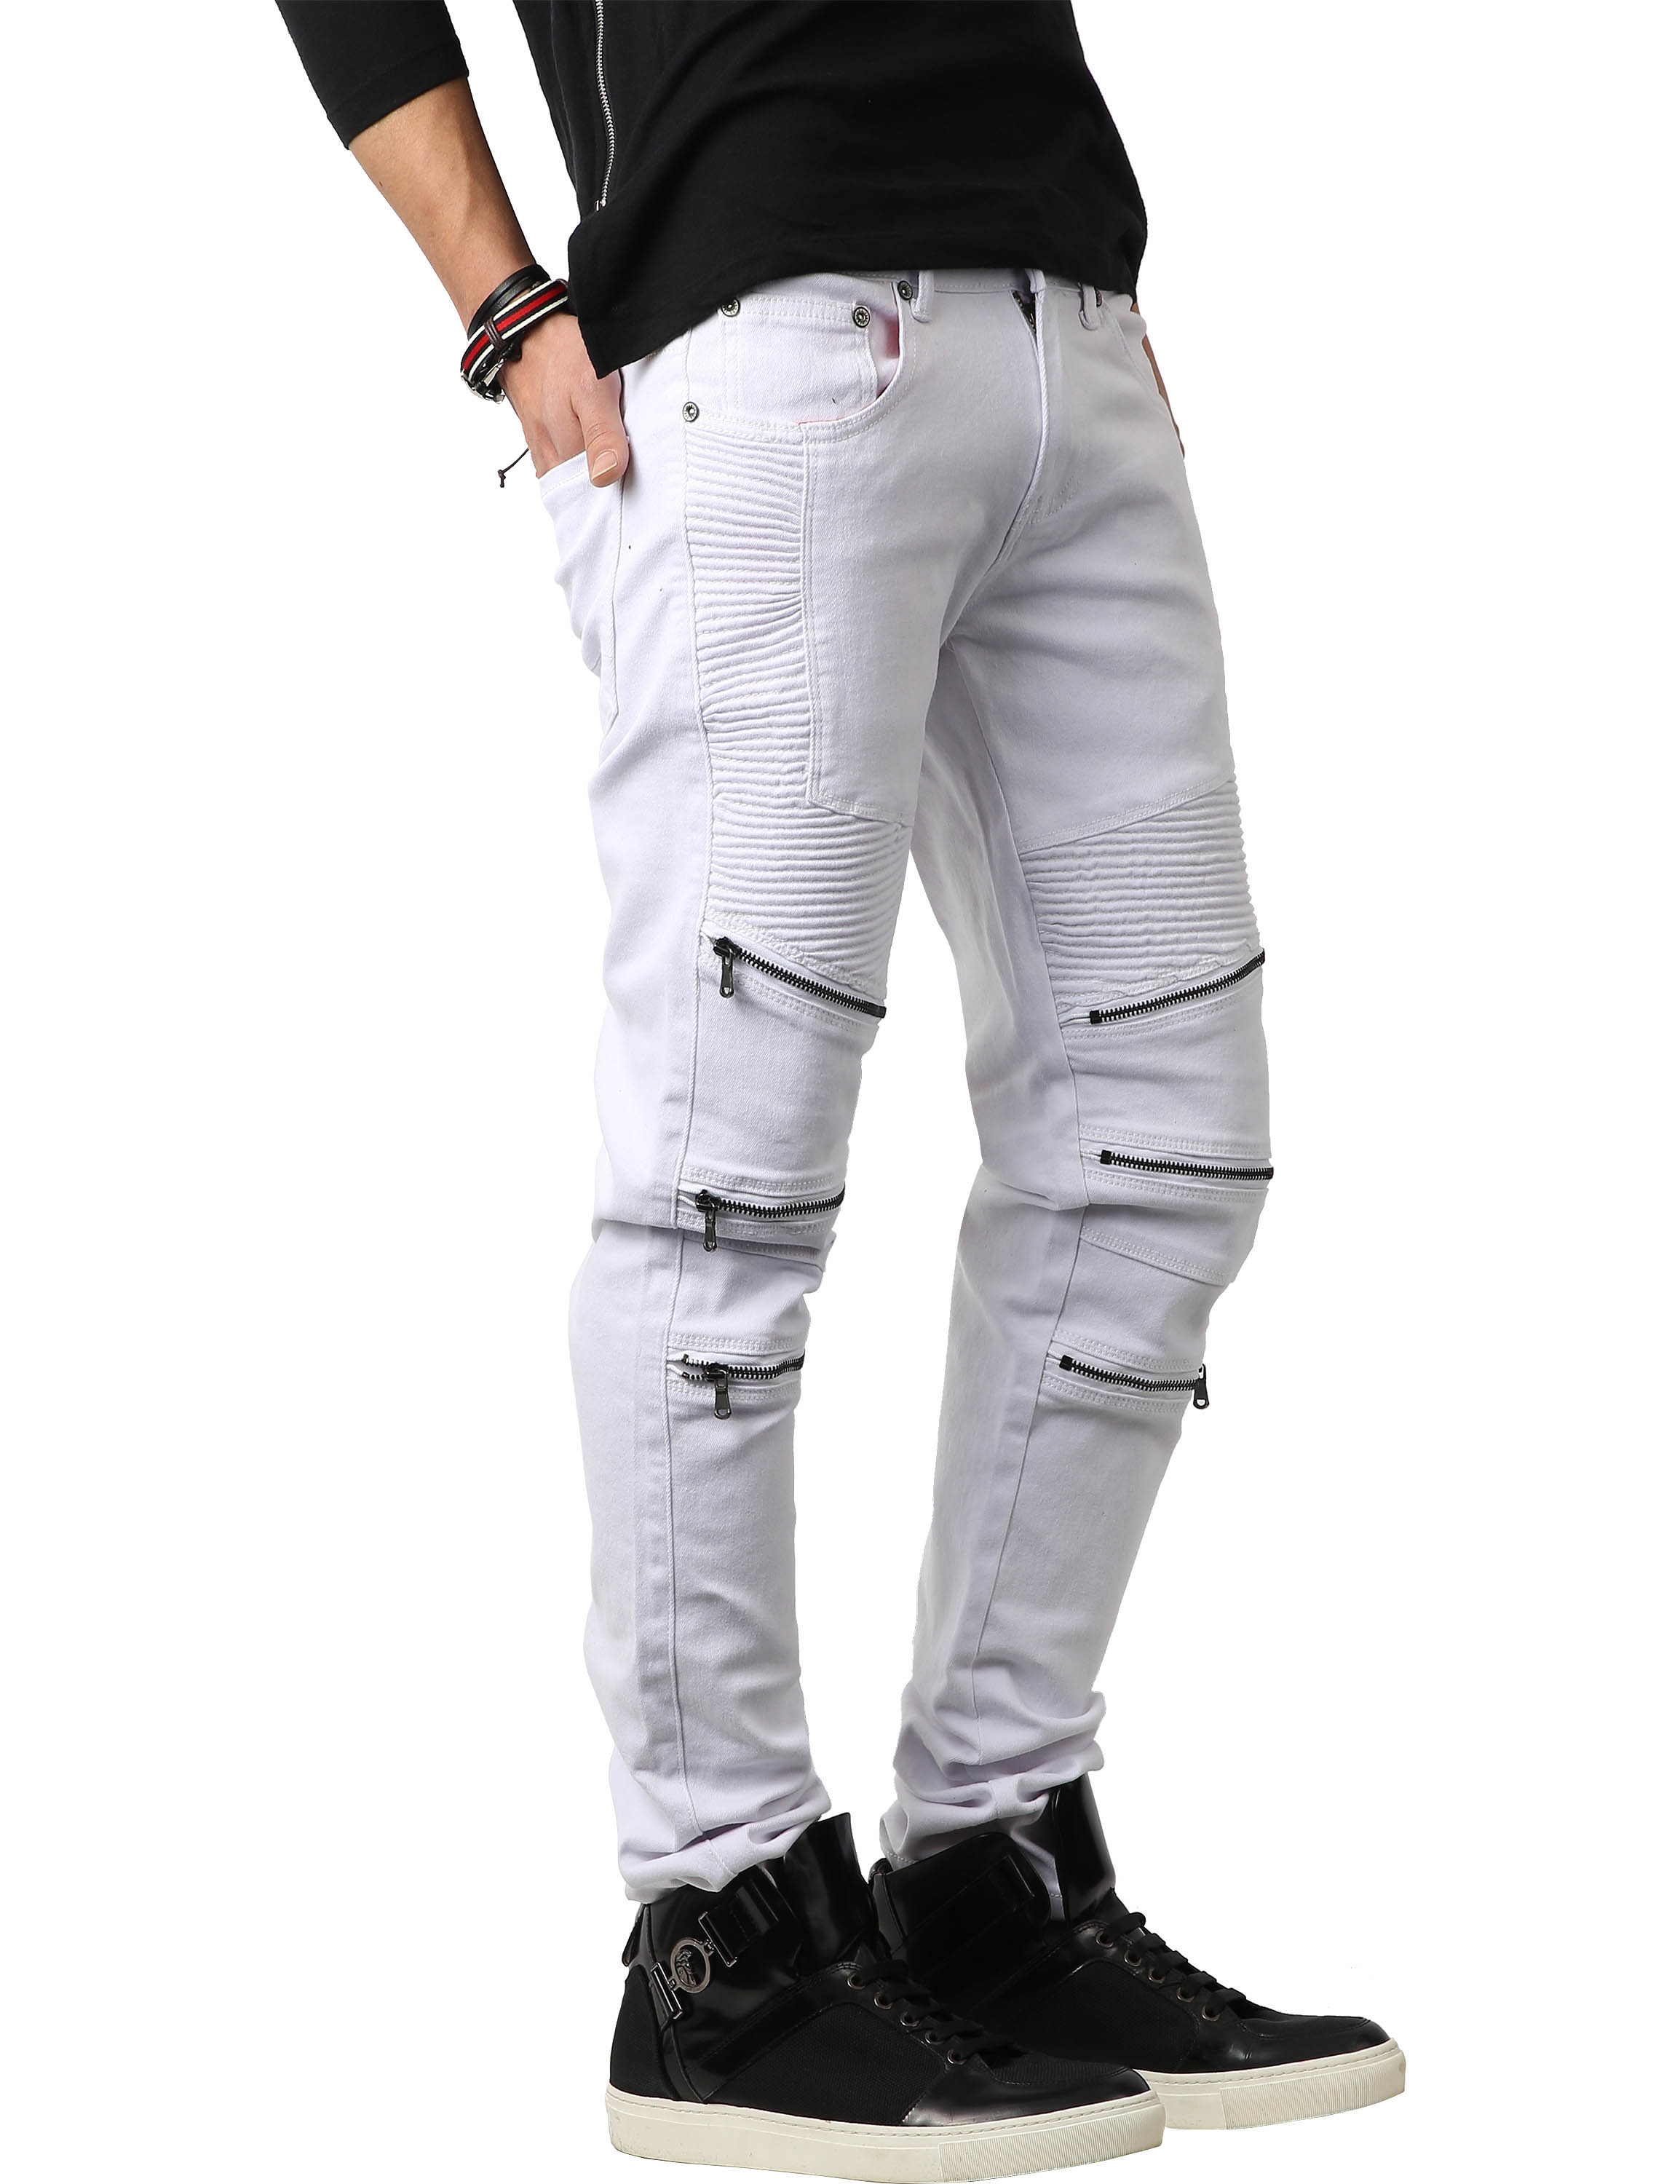 Ma Croix Mens Biker Jeans Distressed Ripped Zipper Straight Slim Fit Stretch Denim Pants - image 3 of 6